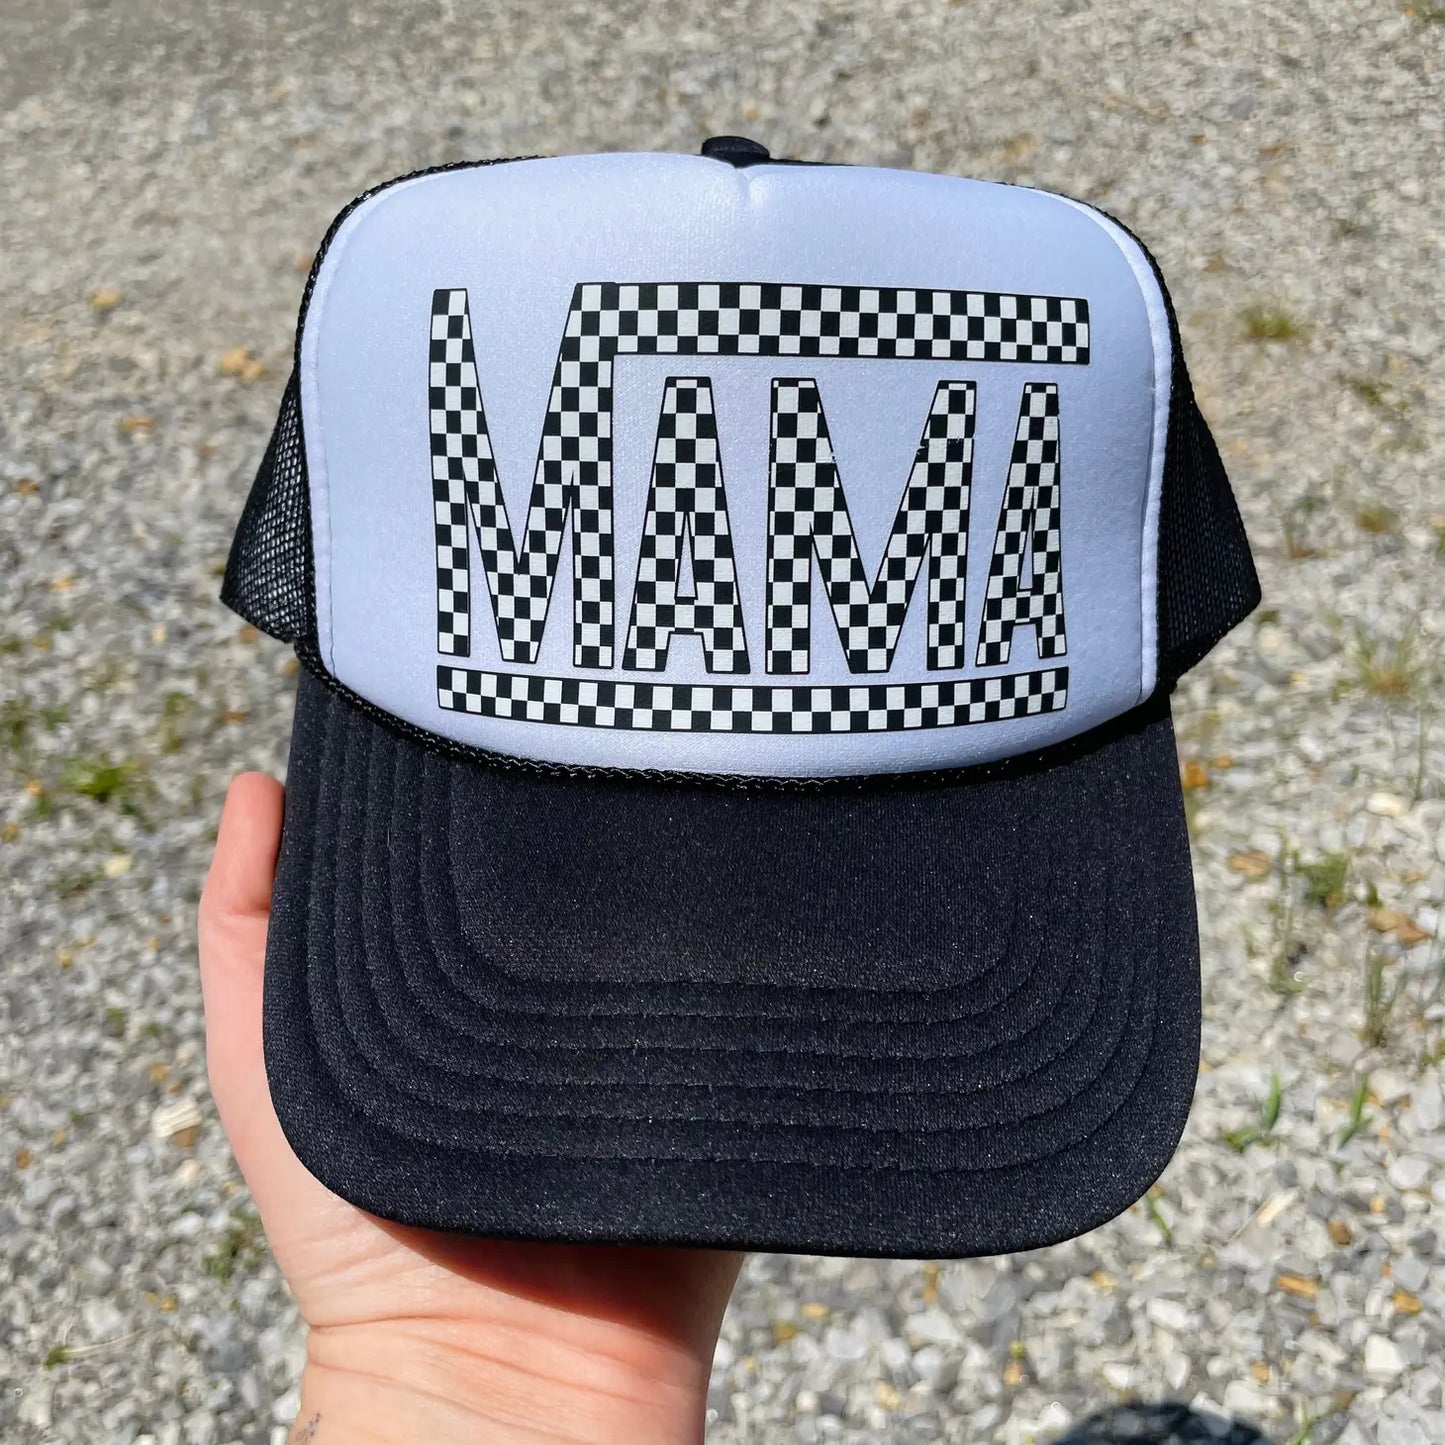 MAMA Trucker Hat